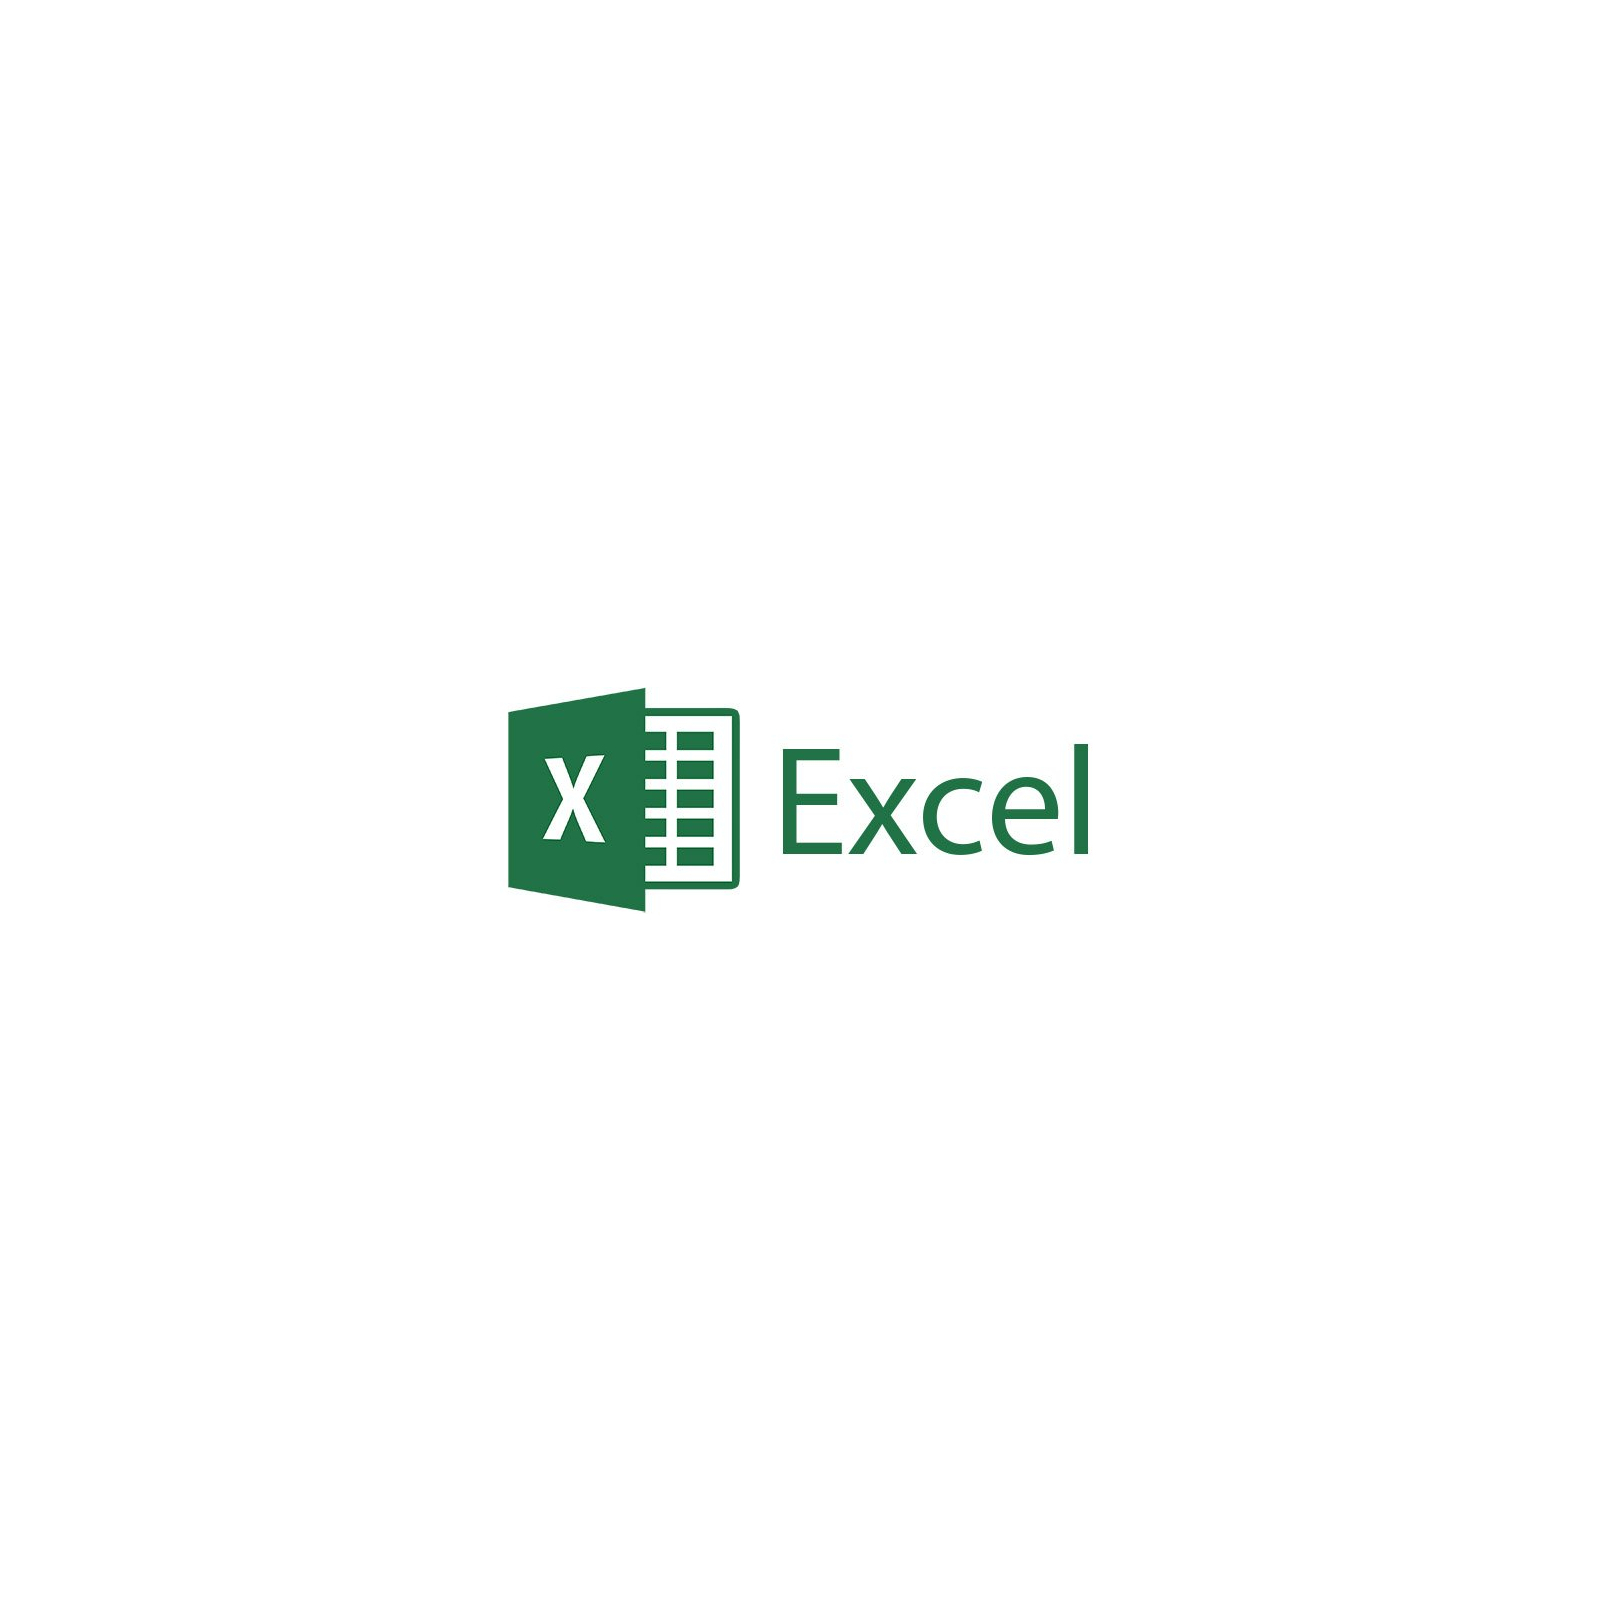 Программная продукция Microsoft ExcelMac 2016 SNGL OLP NL Acdmc (D46-00934)